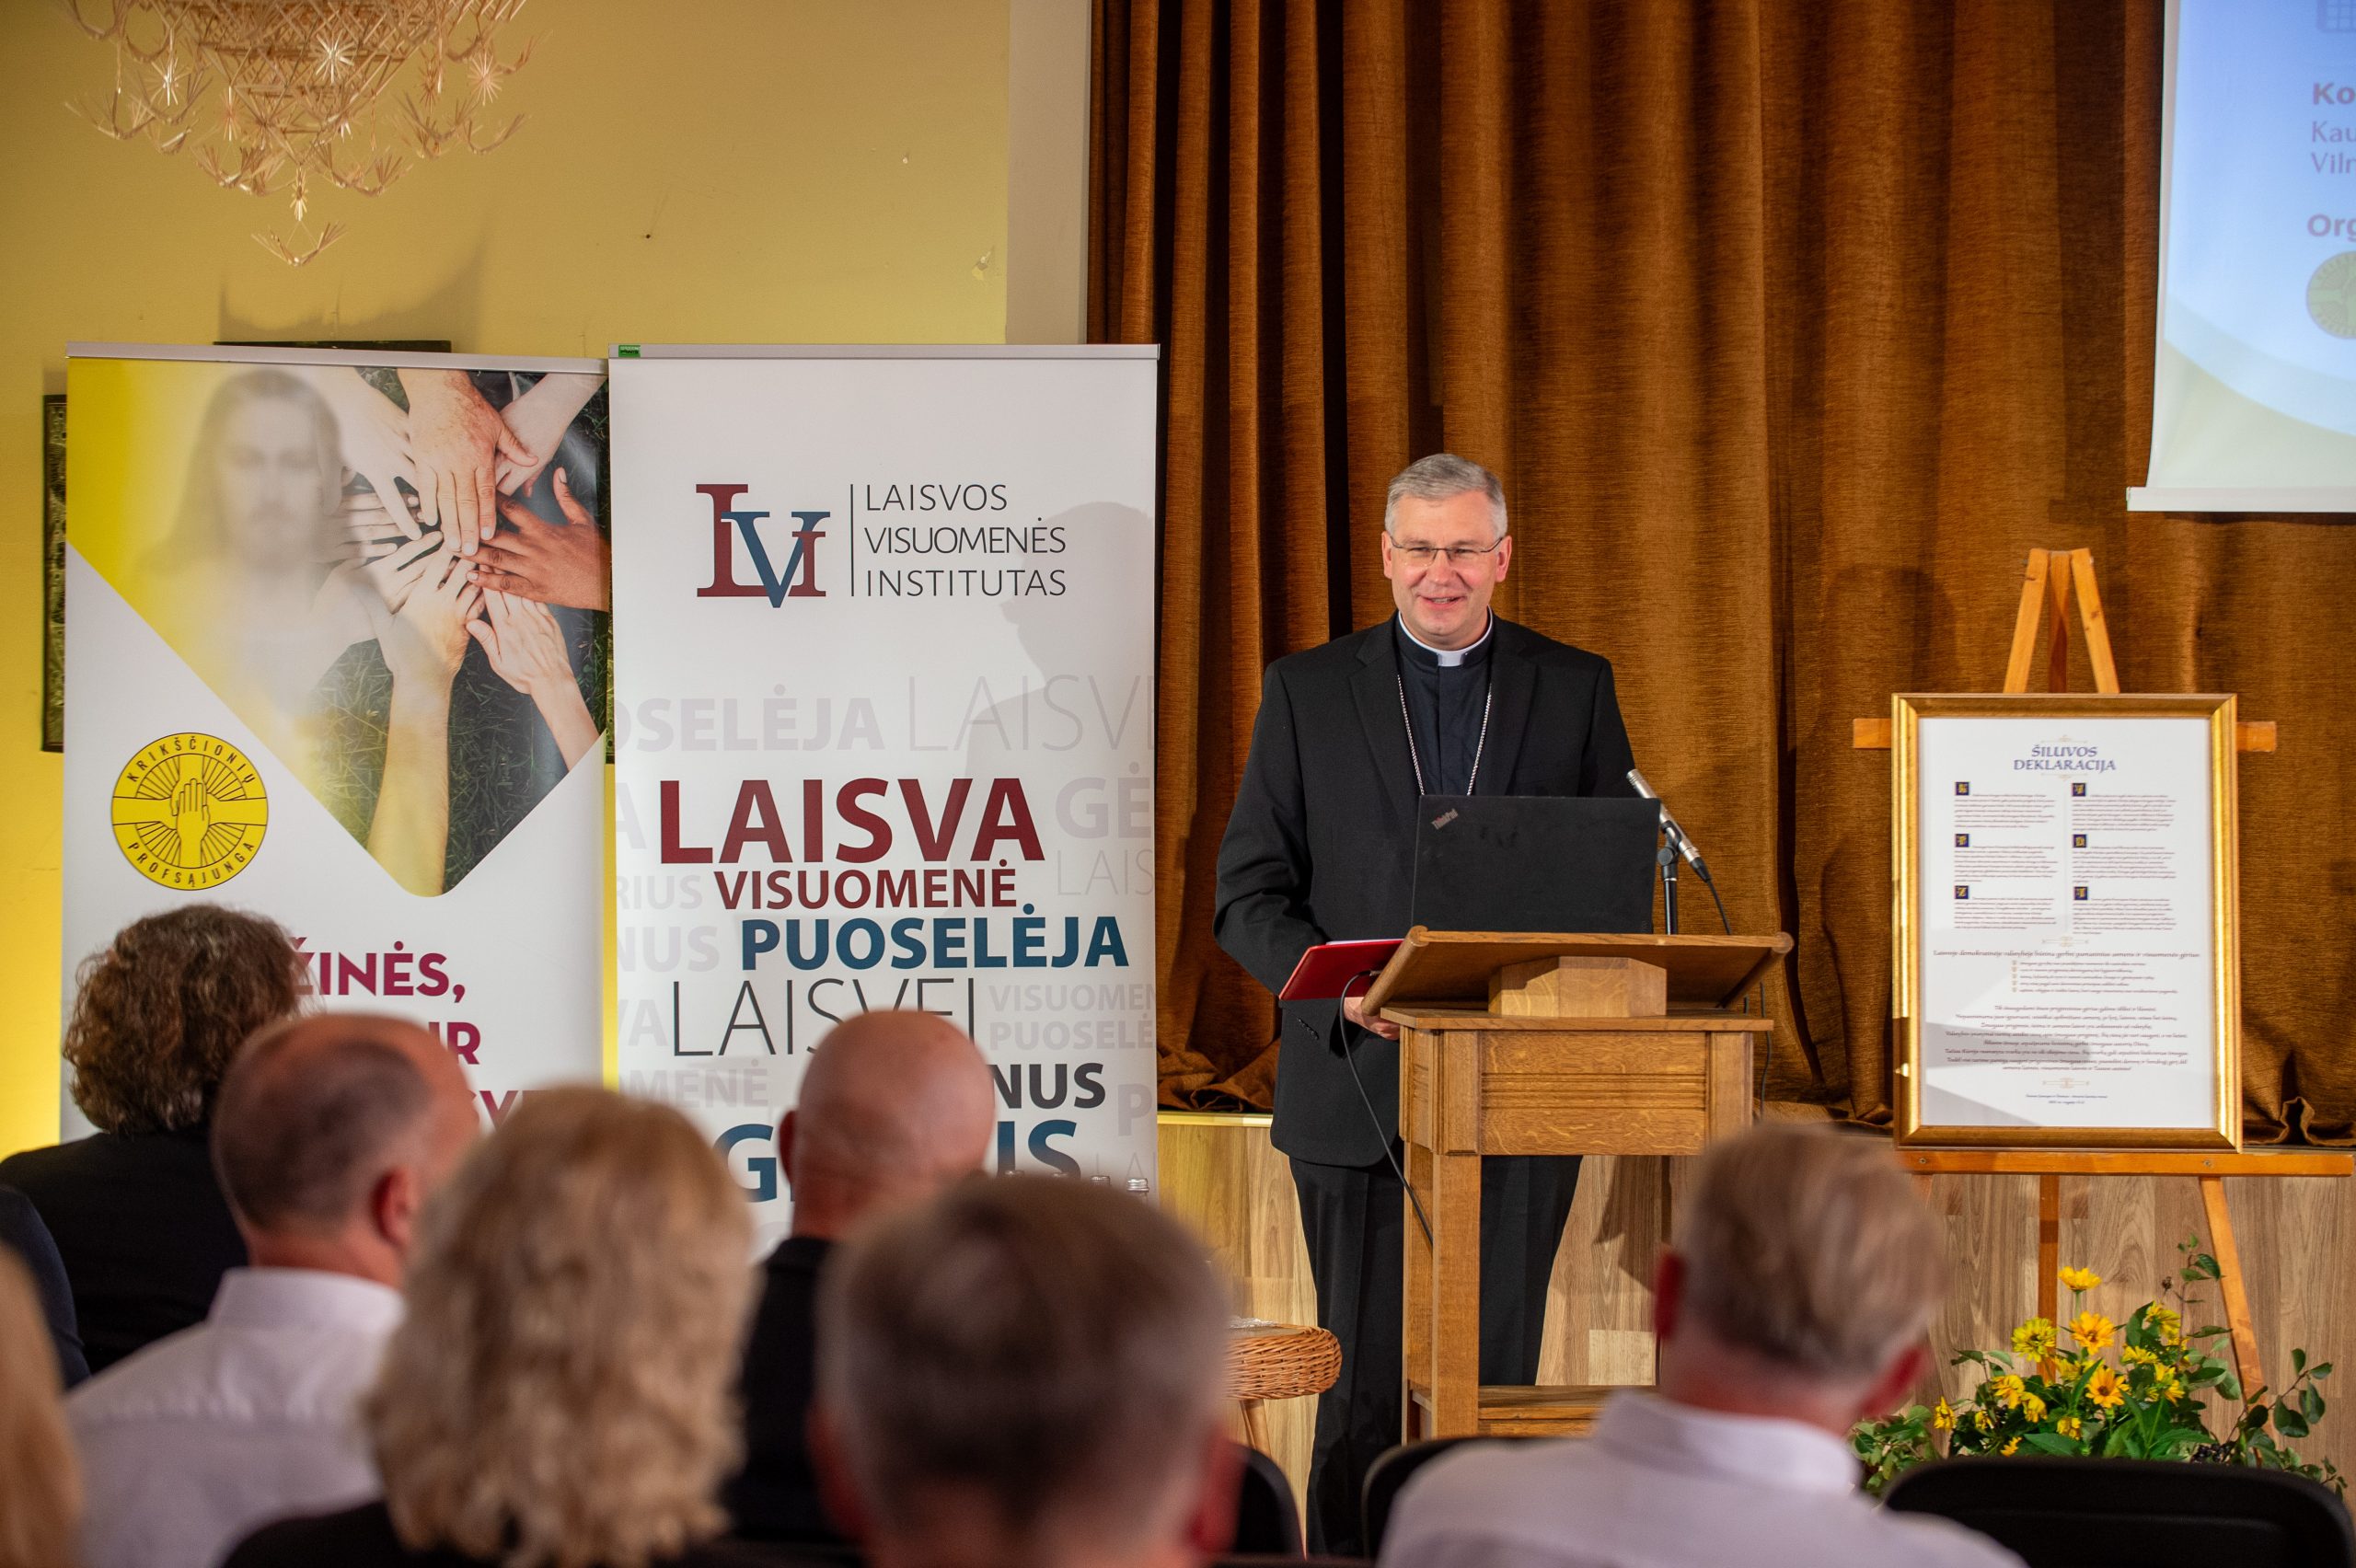 Kauno arkivyskupas metropolitas dr. Kęstutis Kėvalas, nuotr. aut. Juozas Kamenskas